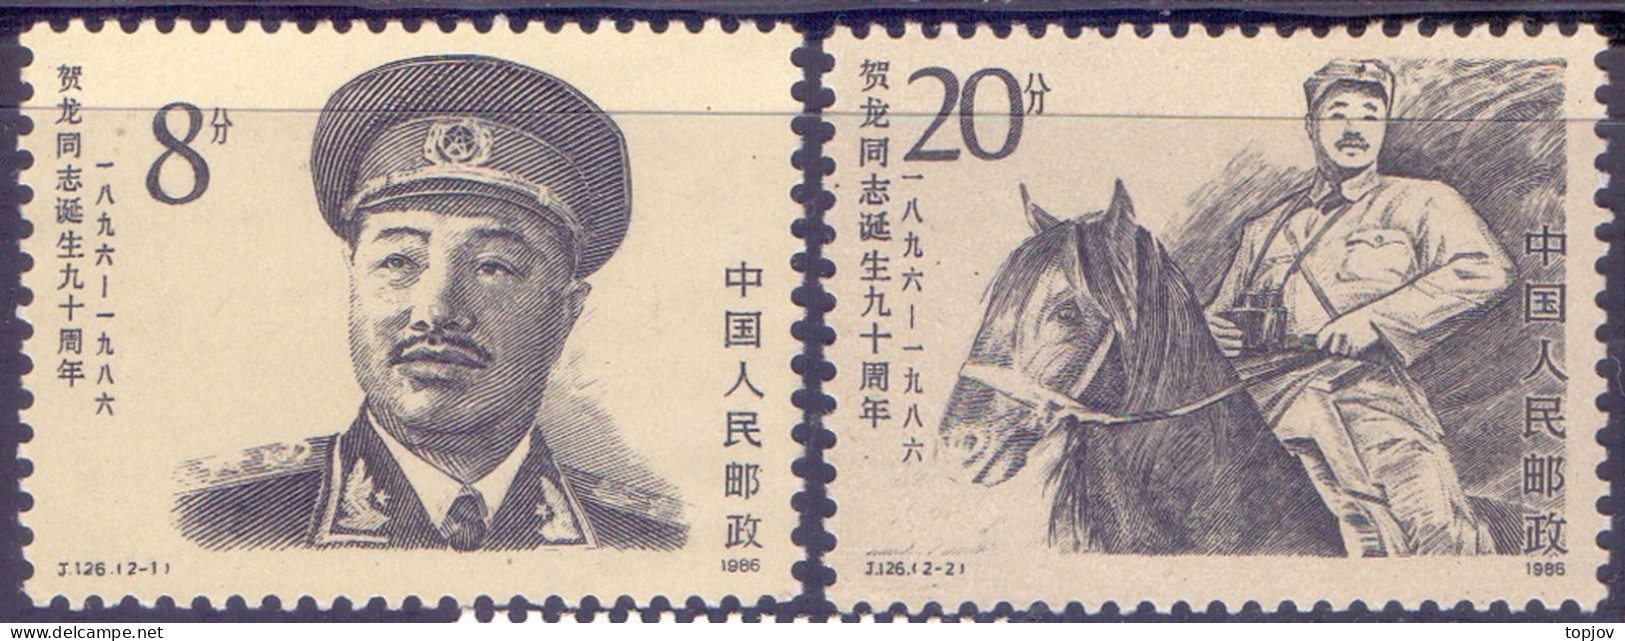 CHINA -  HE LONG - HORSE J.126 - **MNH - 1986 - Grues Et Gruiformes